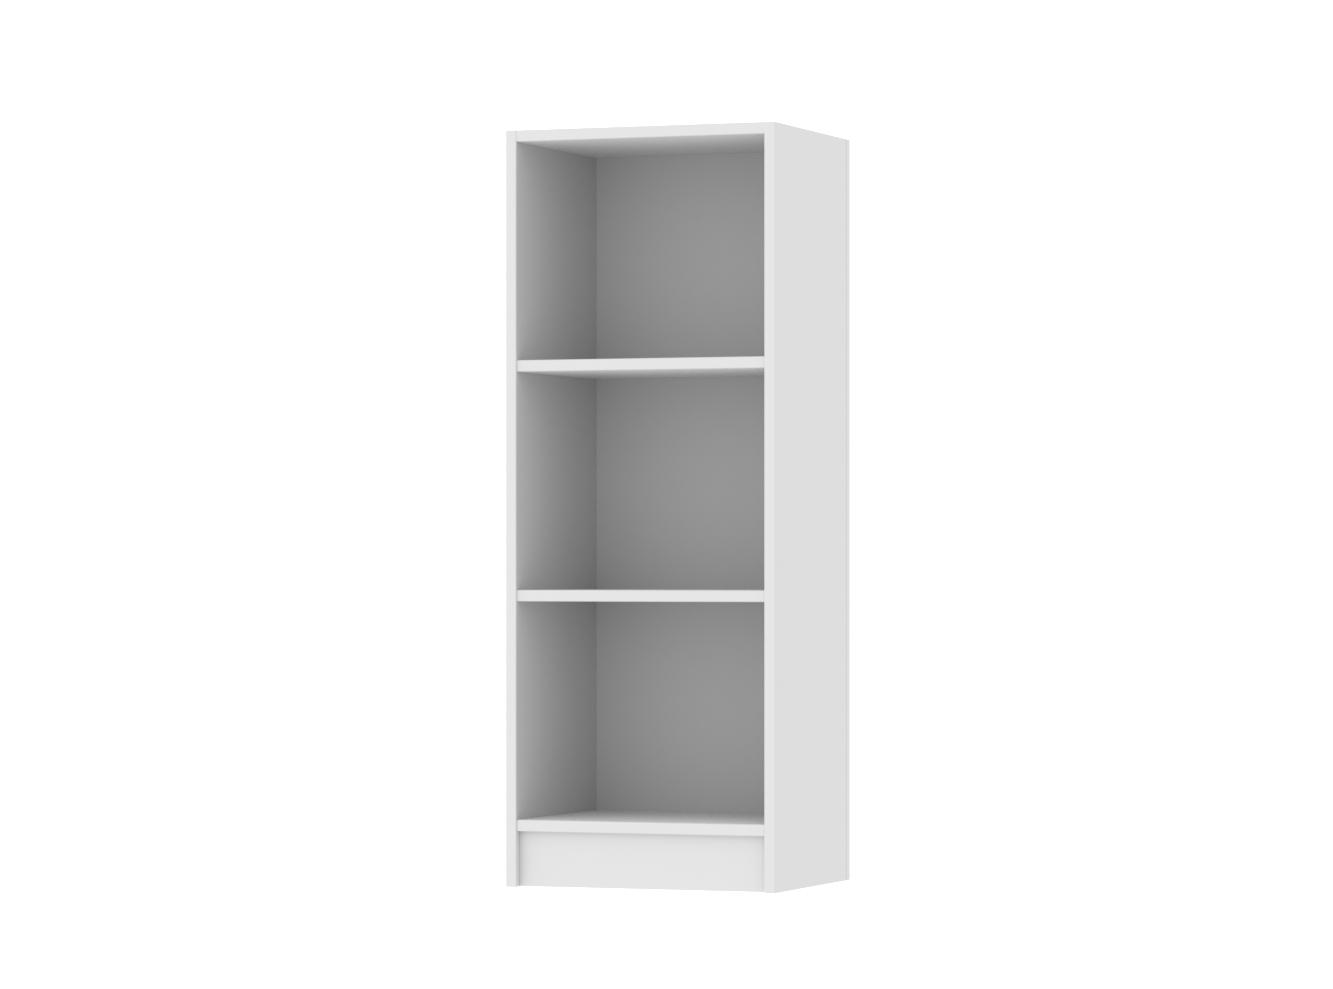 Изображение товара Стеллаж Билли 117 white ИКЕА (IKEA), 40x28x106 см на сайте adeta.ru